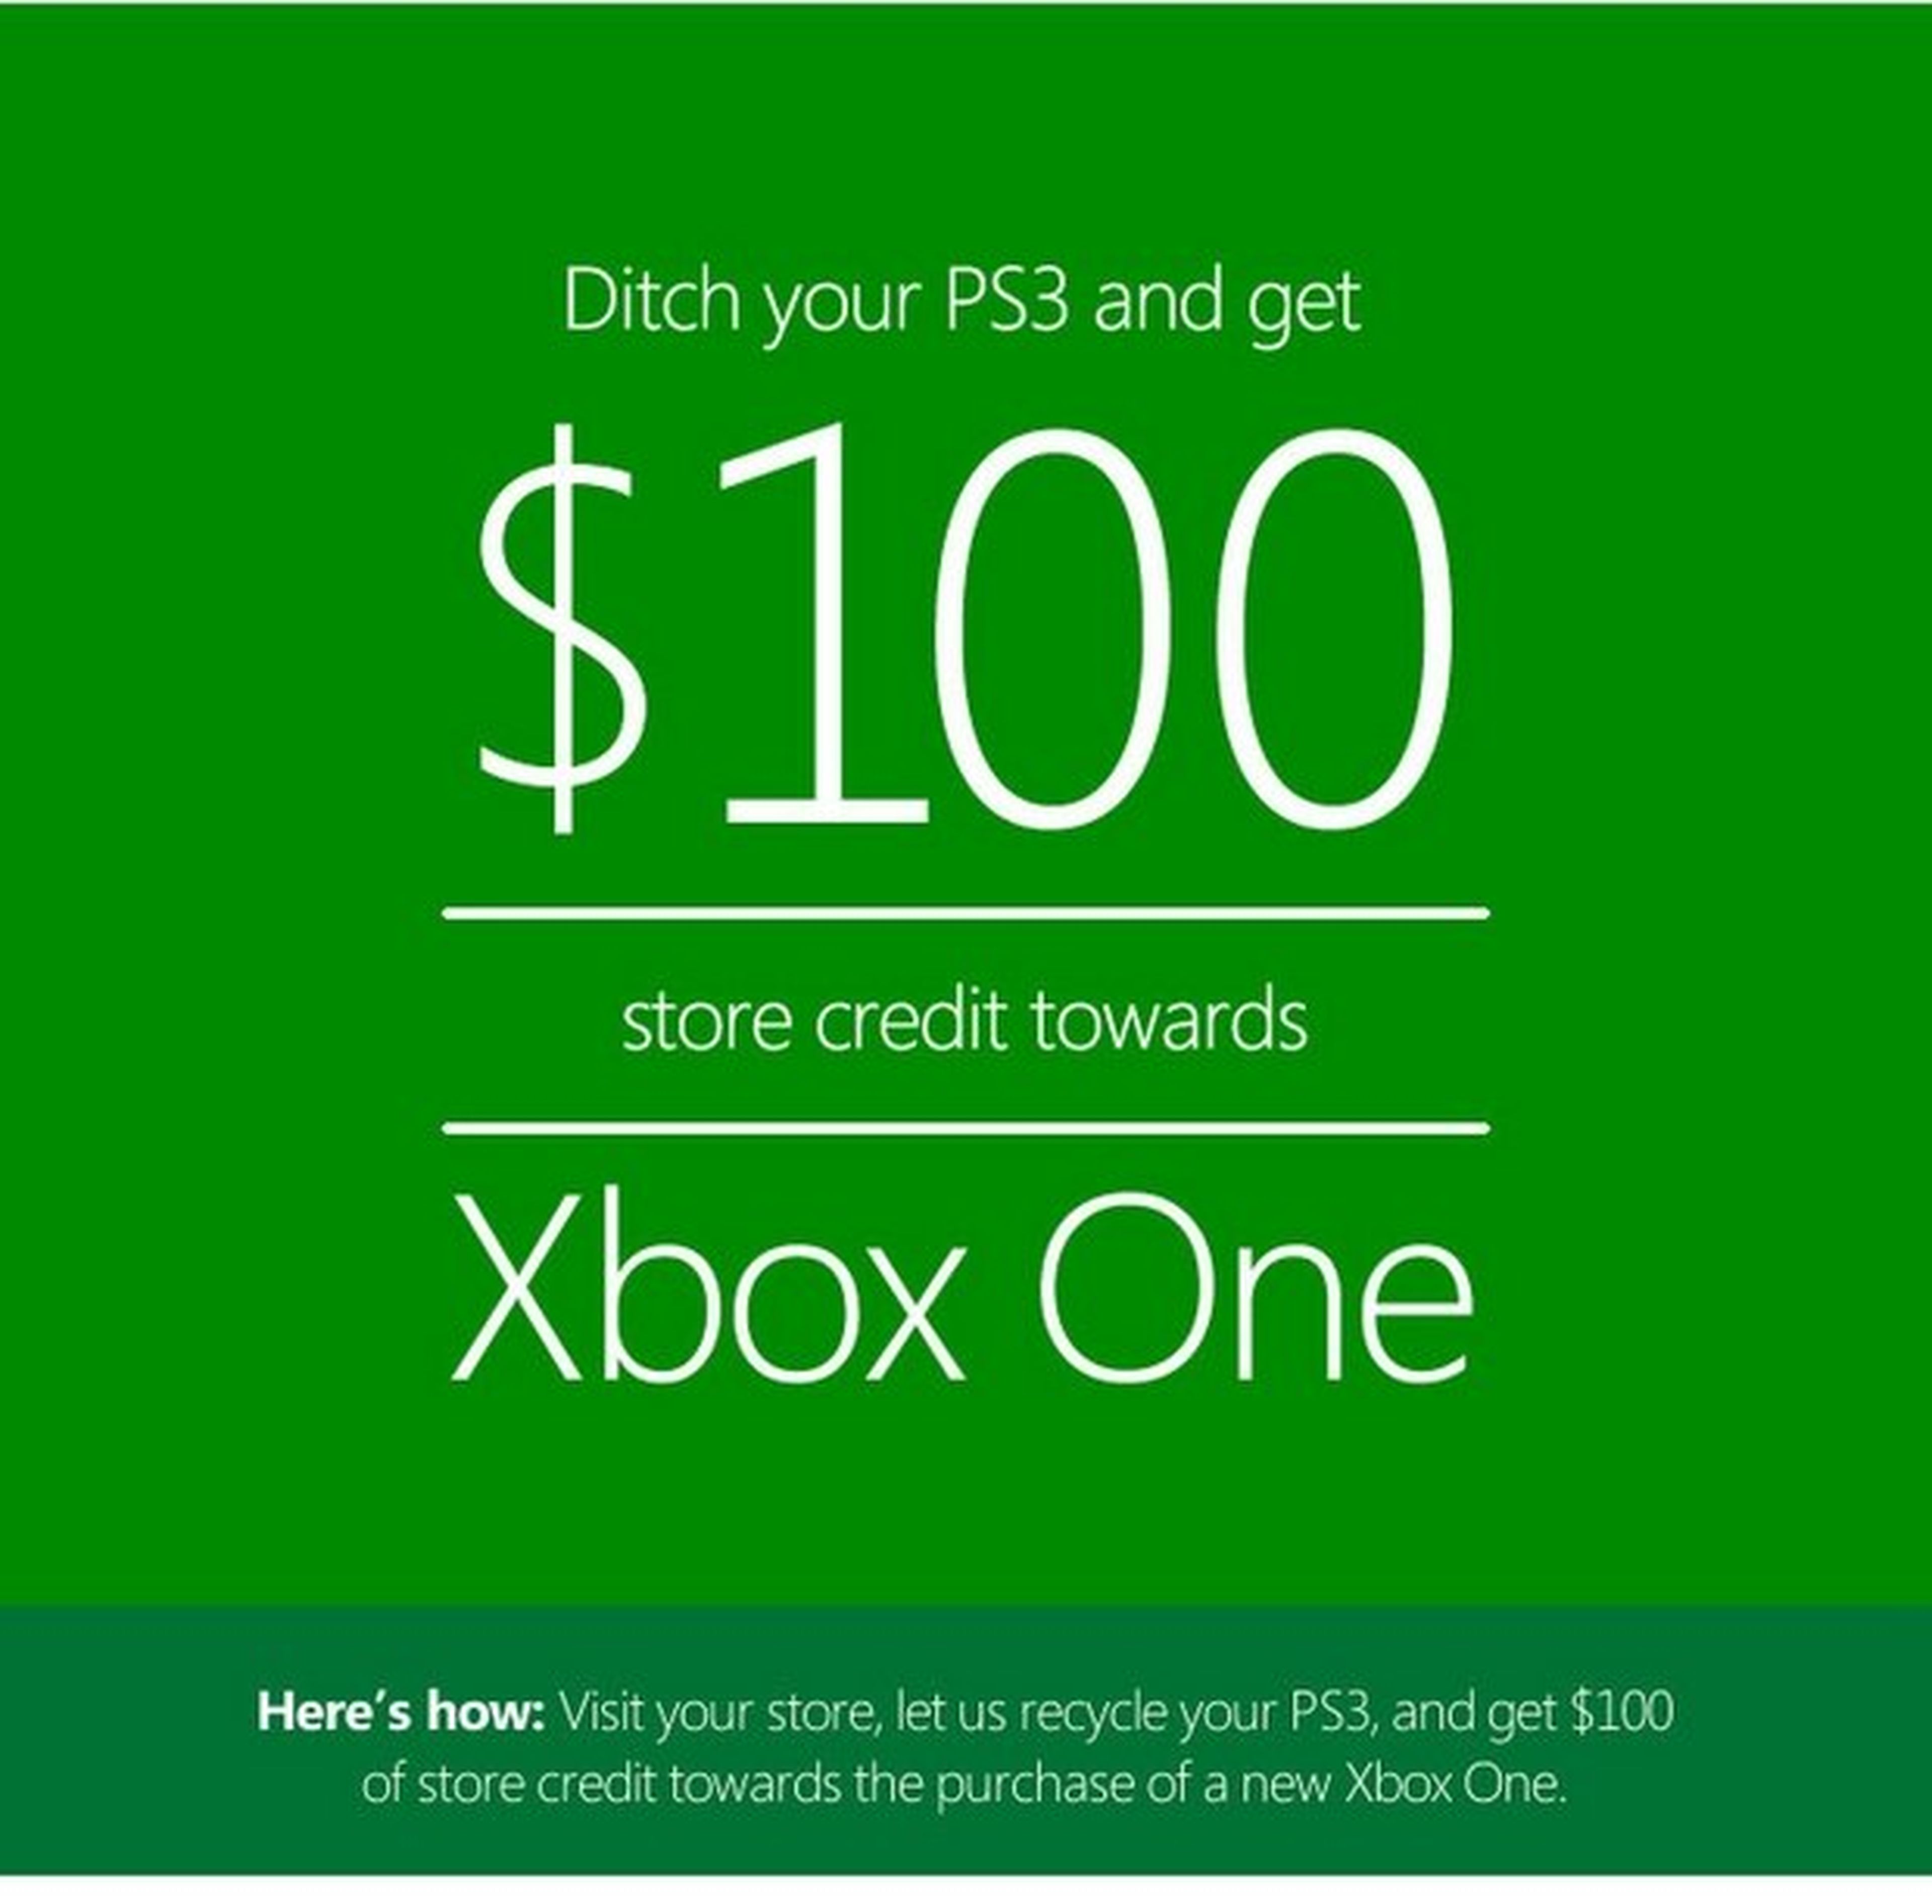 Microsoft paga 100 dólares por tu PS3